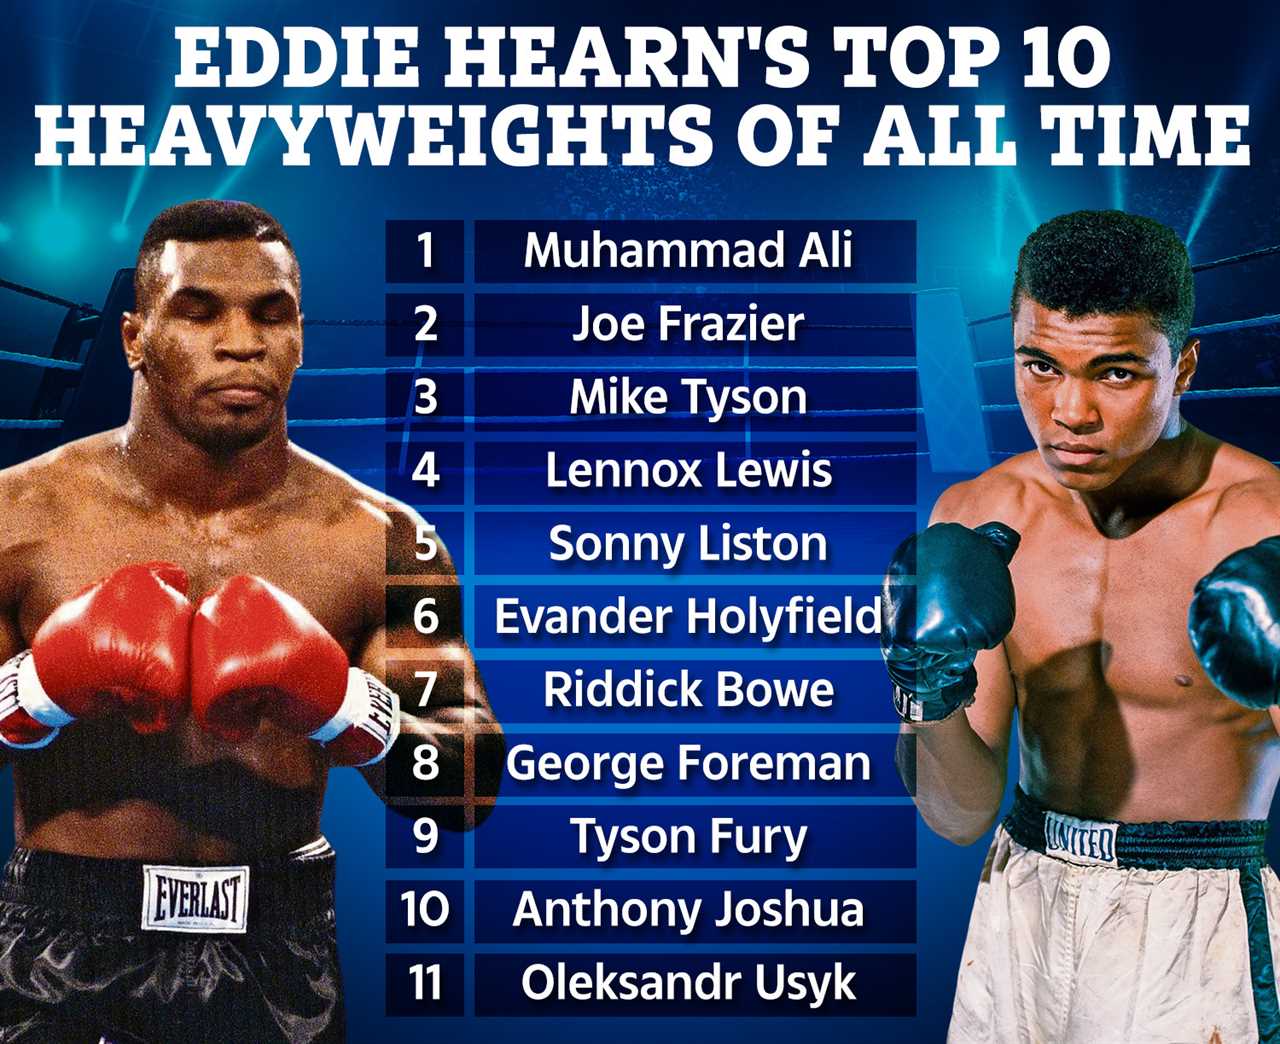 Eddie Hearn lists the top 10 heavyweights of all time, including Tyson Fury (and Anthony Joshua), but Oscar De La Hoya trolls them